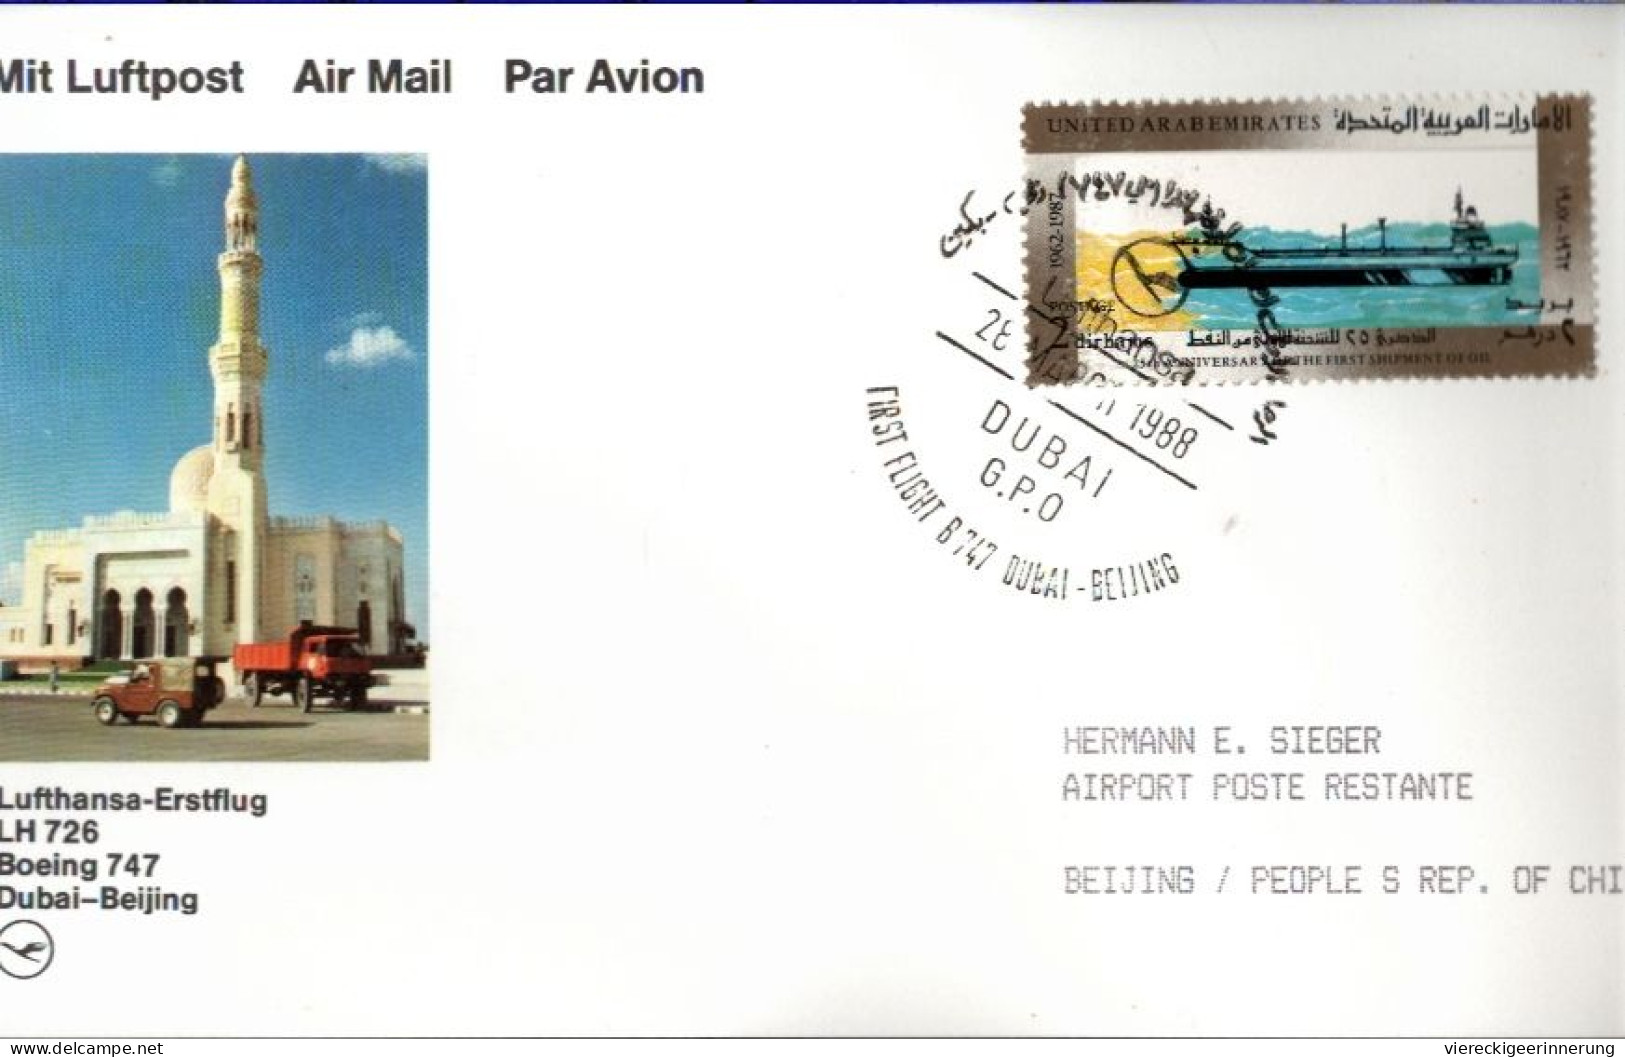 ! Lot of 12 airmail printed matters, 1981-1988, Luftpostbelege, Dubai, trucial states, Vereinigte Arabische Emirate